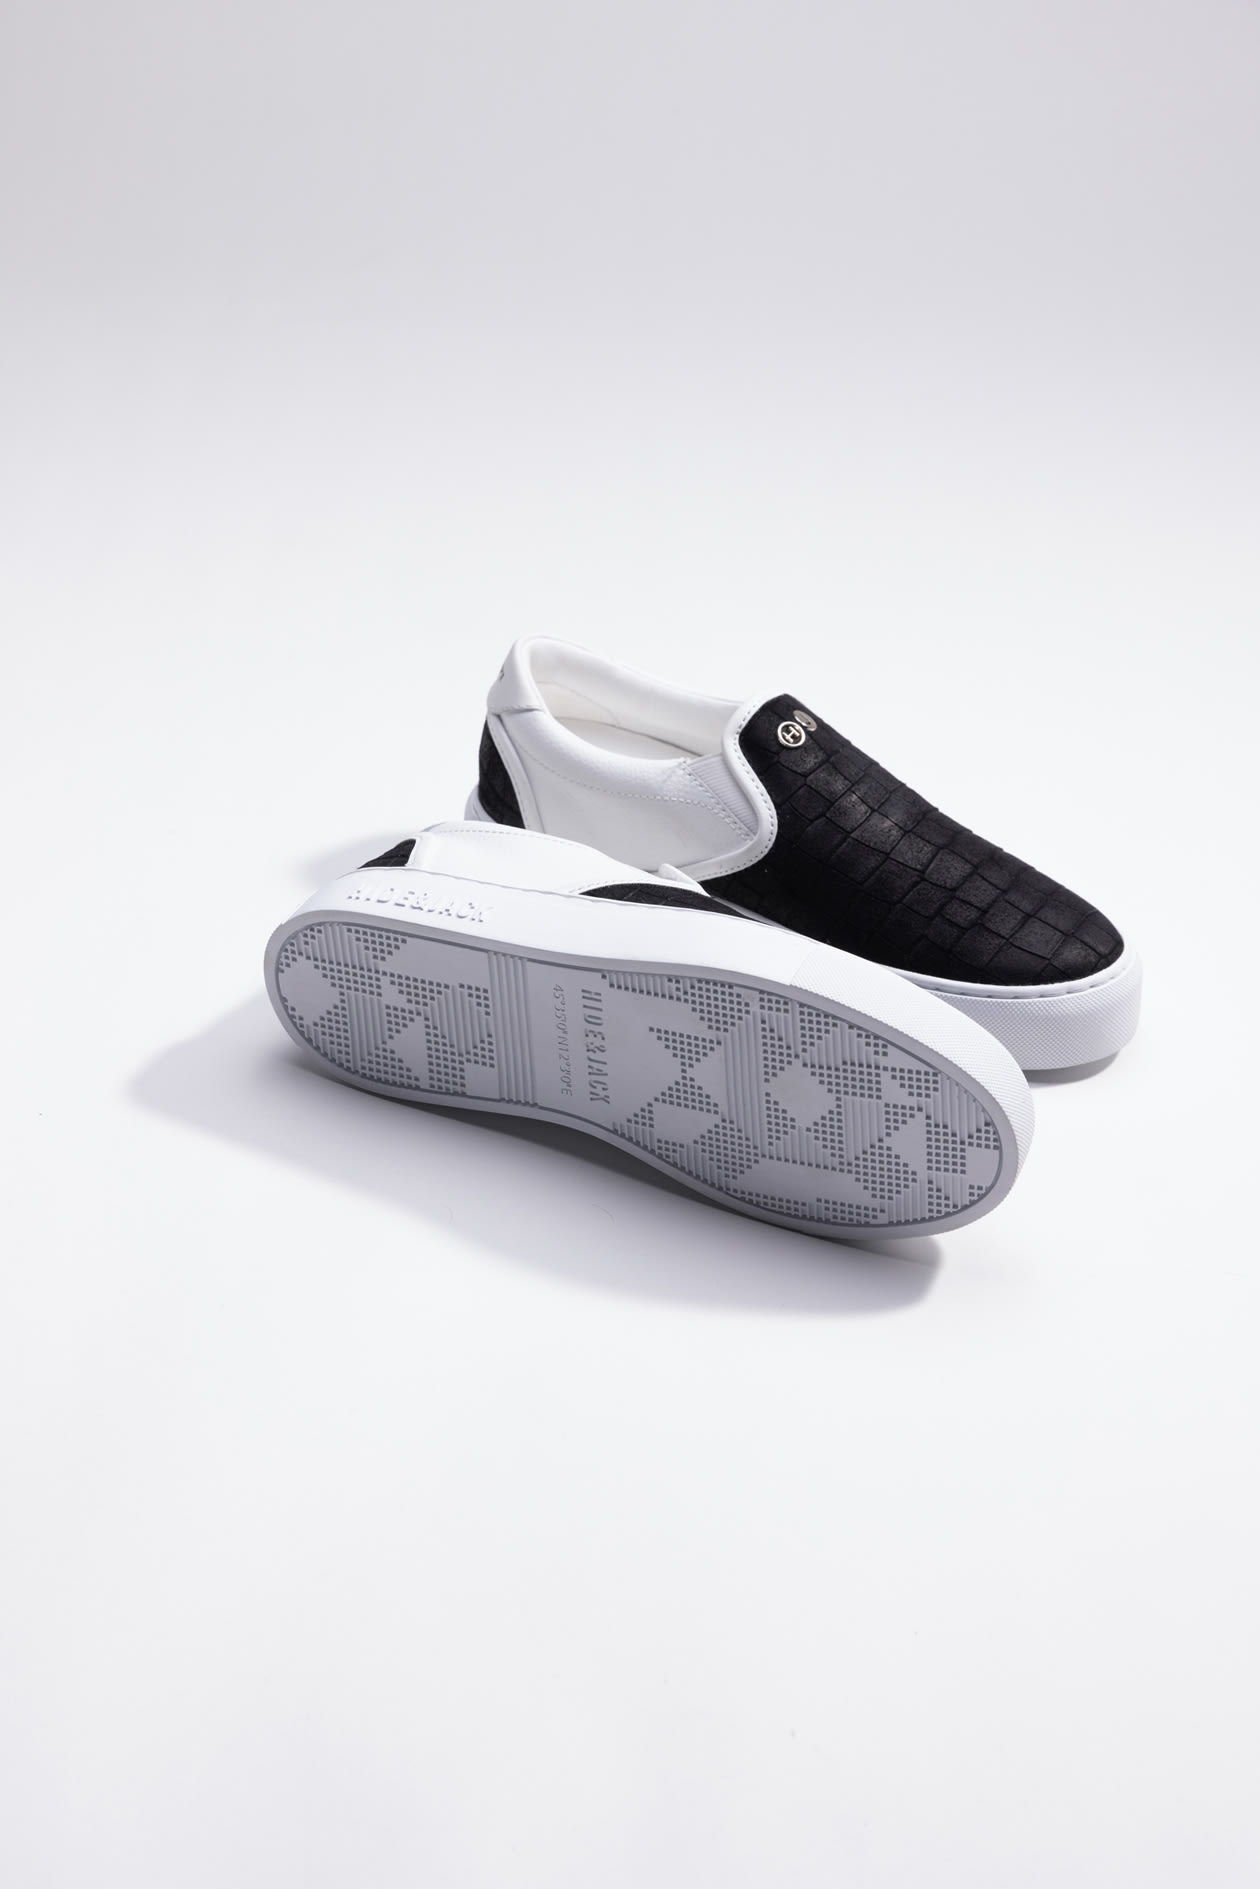 Hide & Jack Low Top Sneaker - Fuji Black